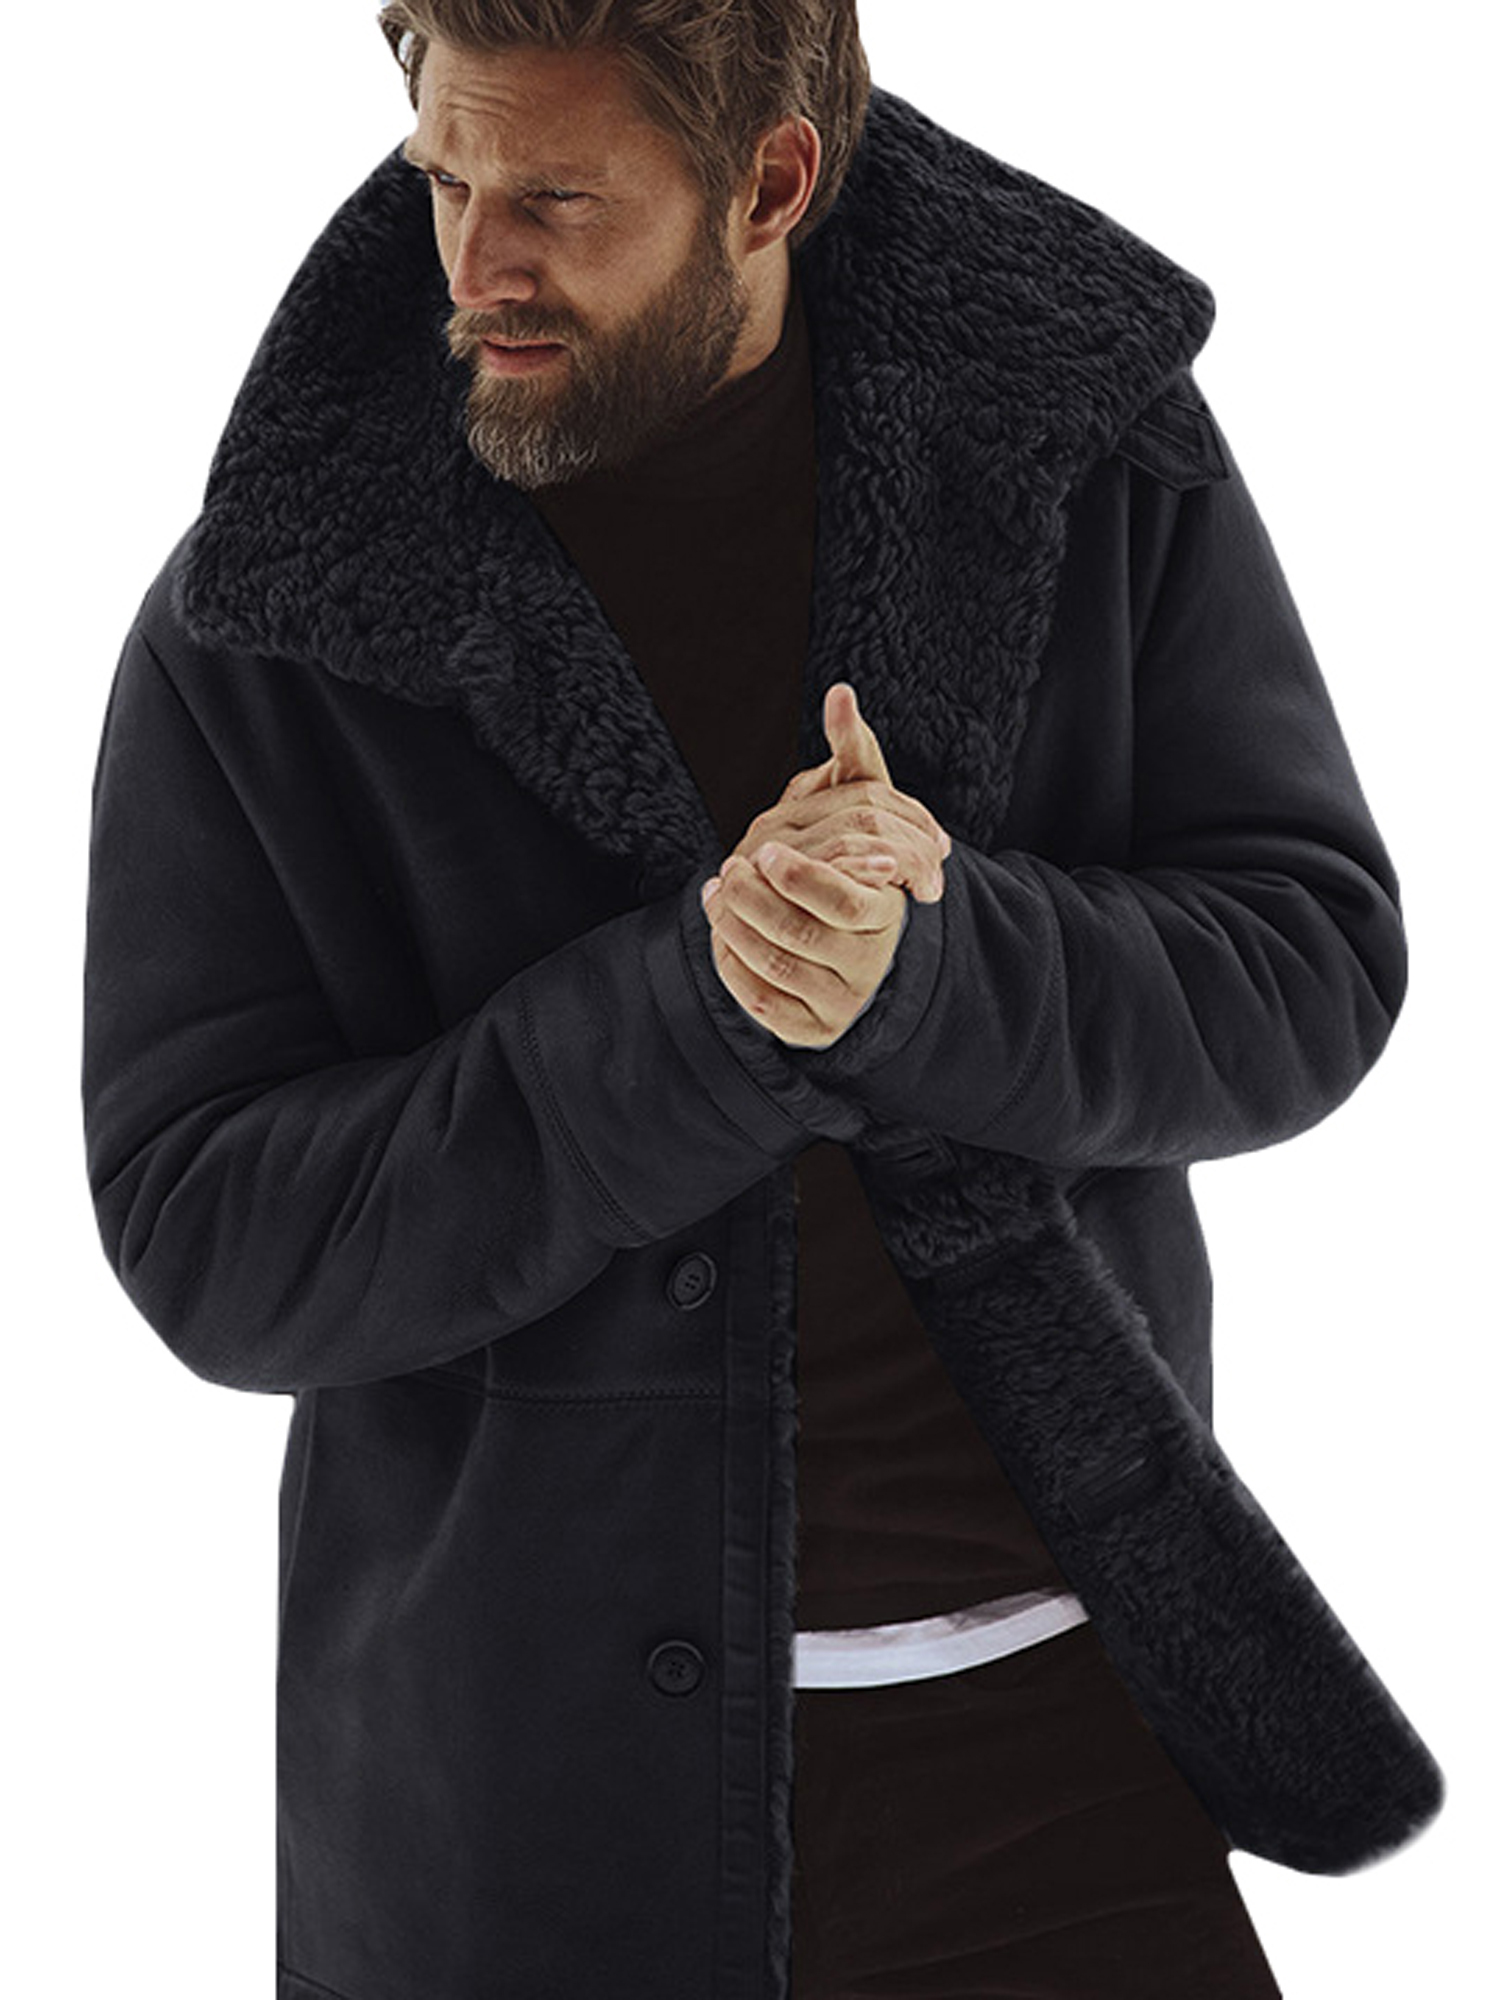 Men/'s Fur Lined Jacket Button Thick Fleece Parka Overcoat Winter Warm Coats Tops